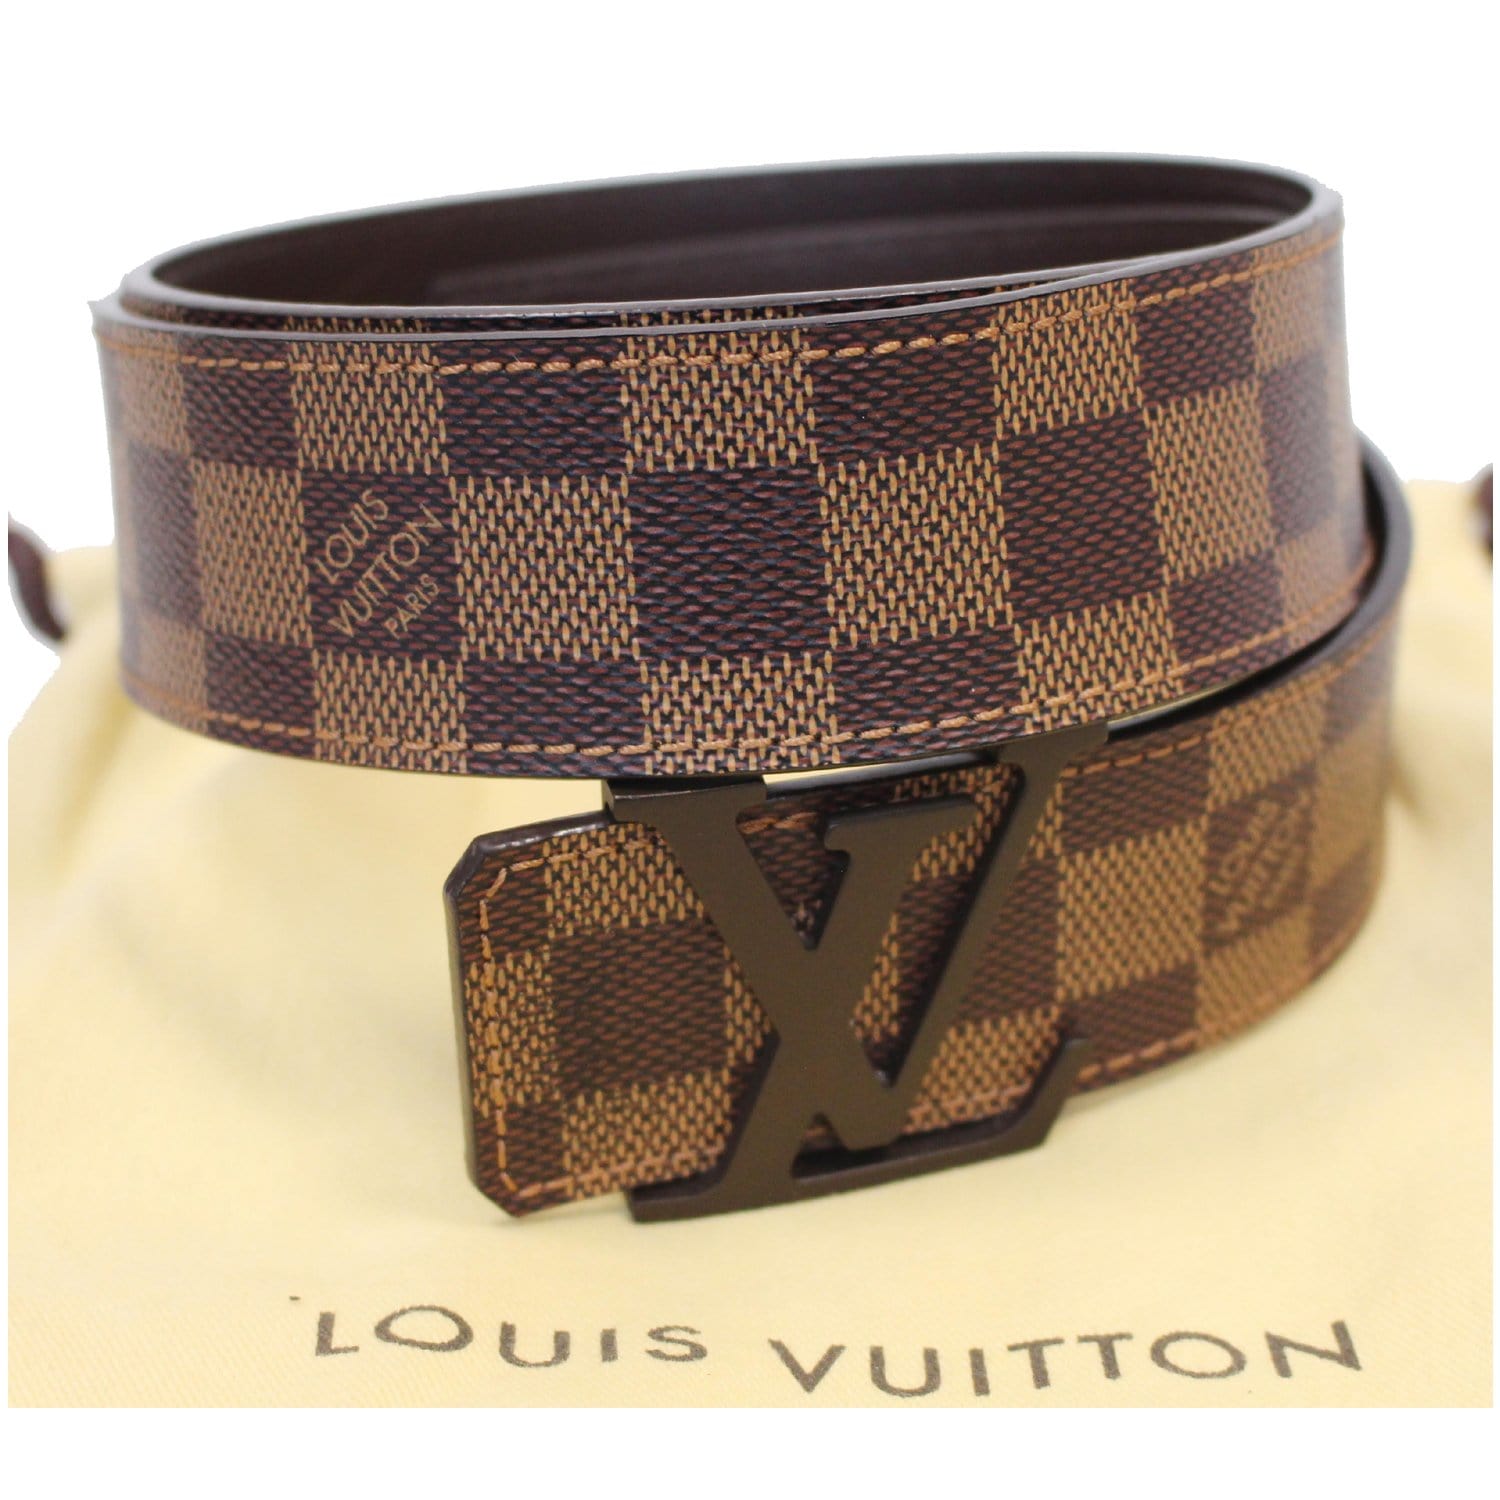 Shop Louis Vuitton Belts for Men in USA